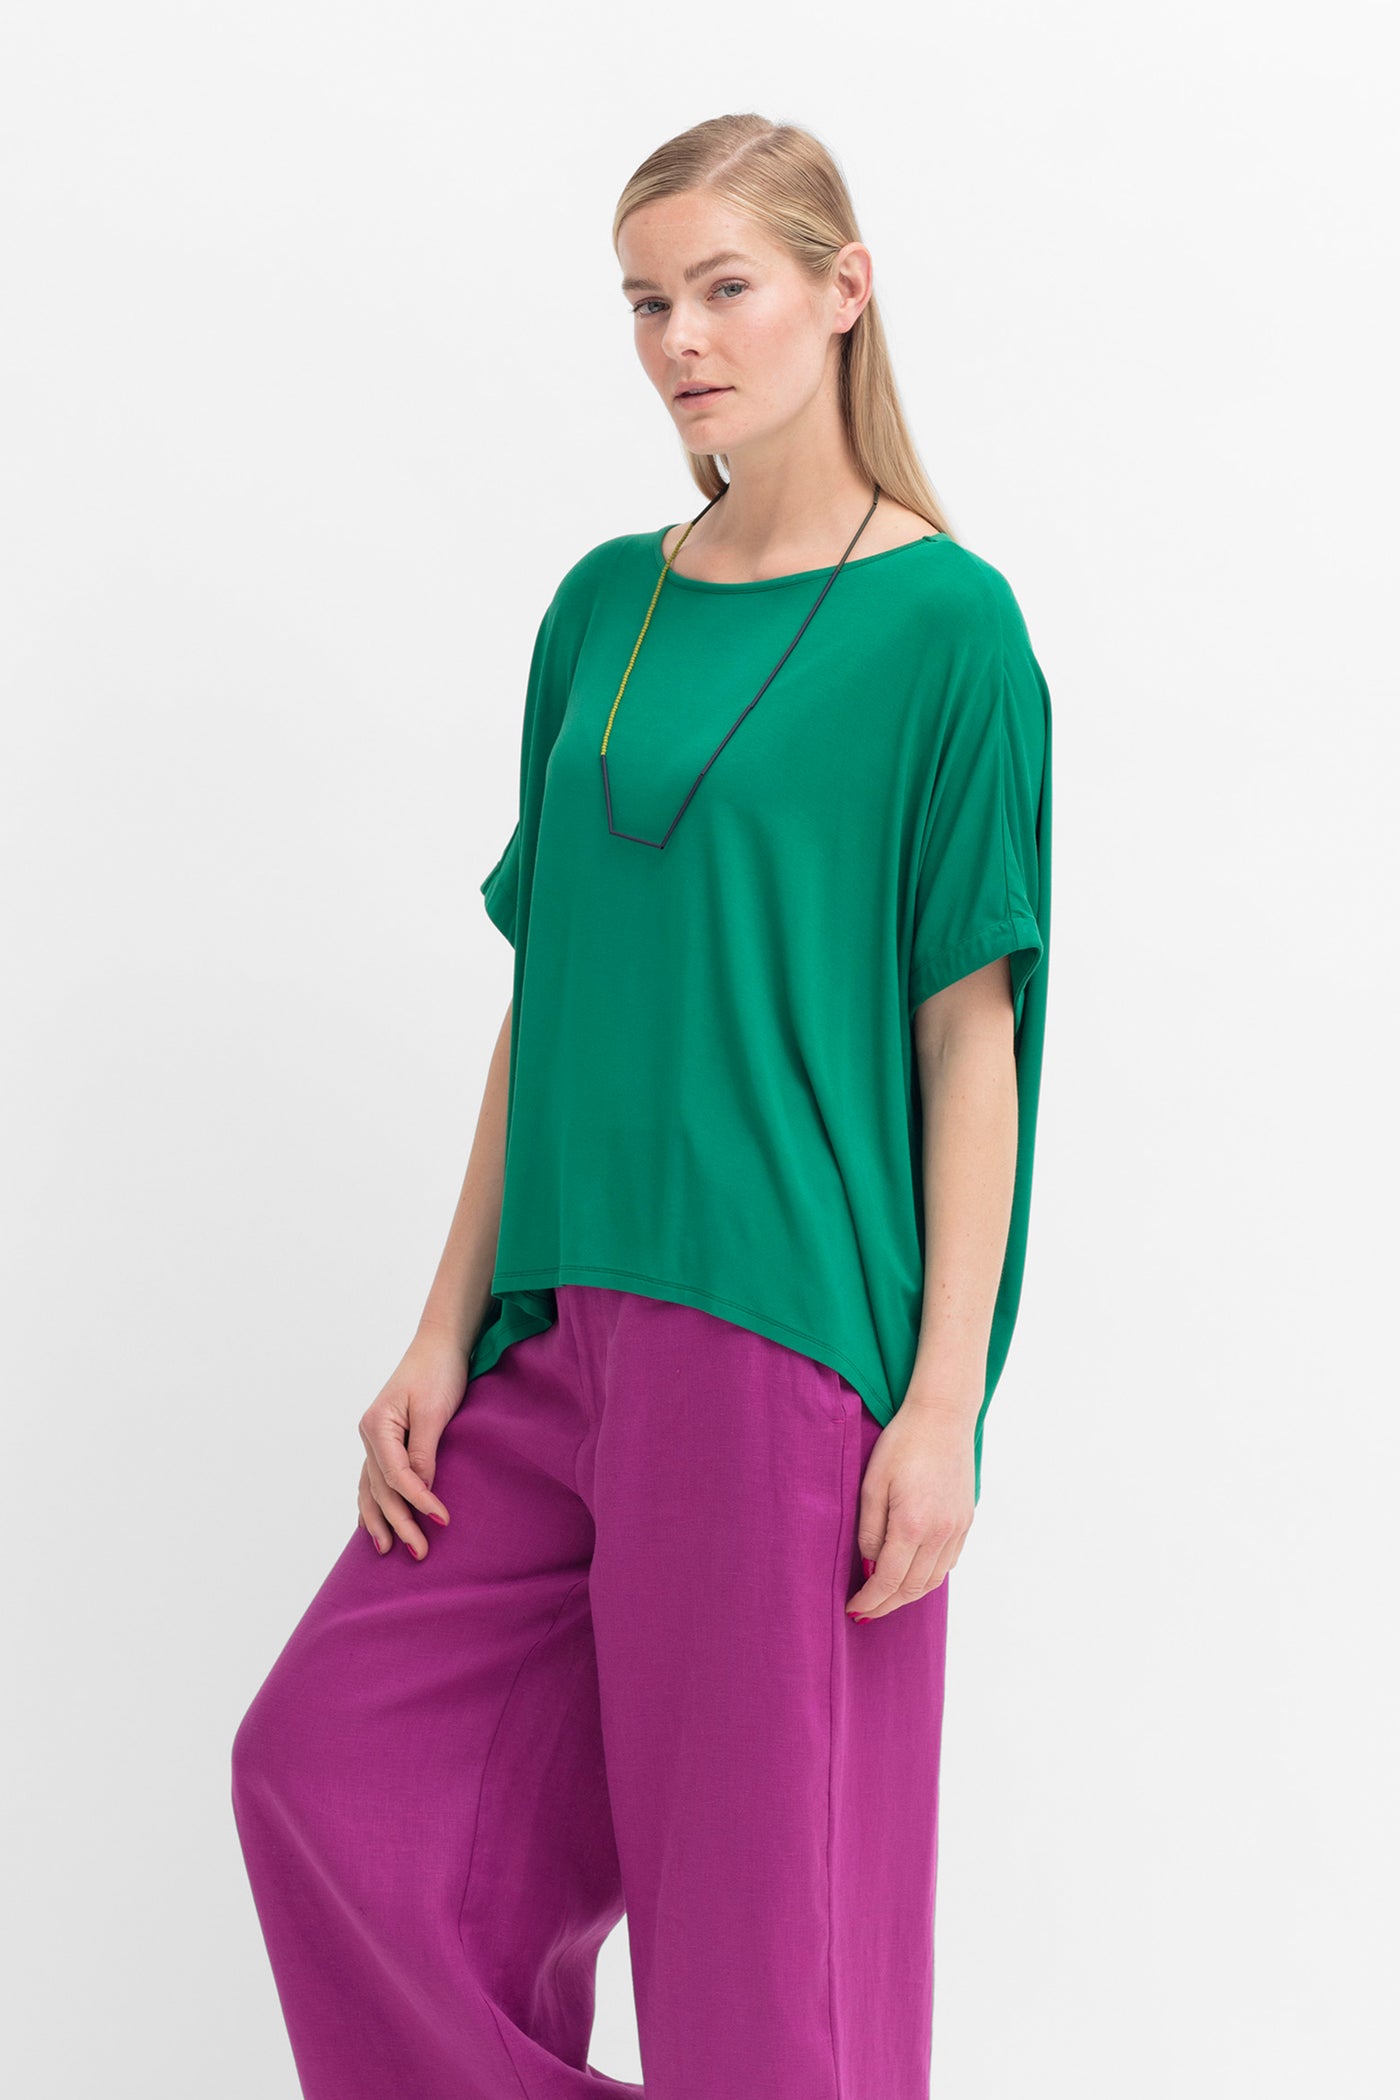 Model wearing Cedar Green Telse T-Shirt by Elk the Label and Wild Berry Anneli Pants